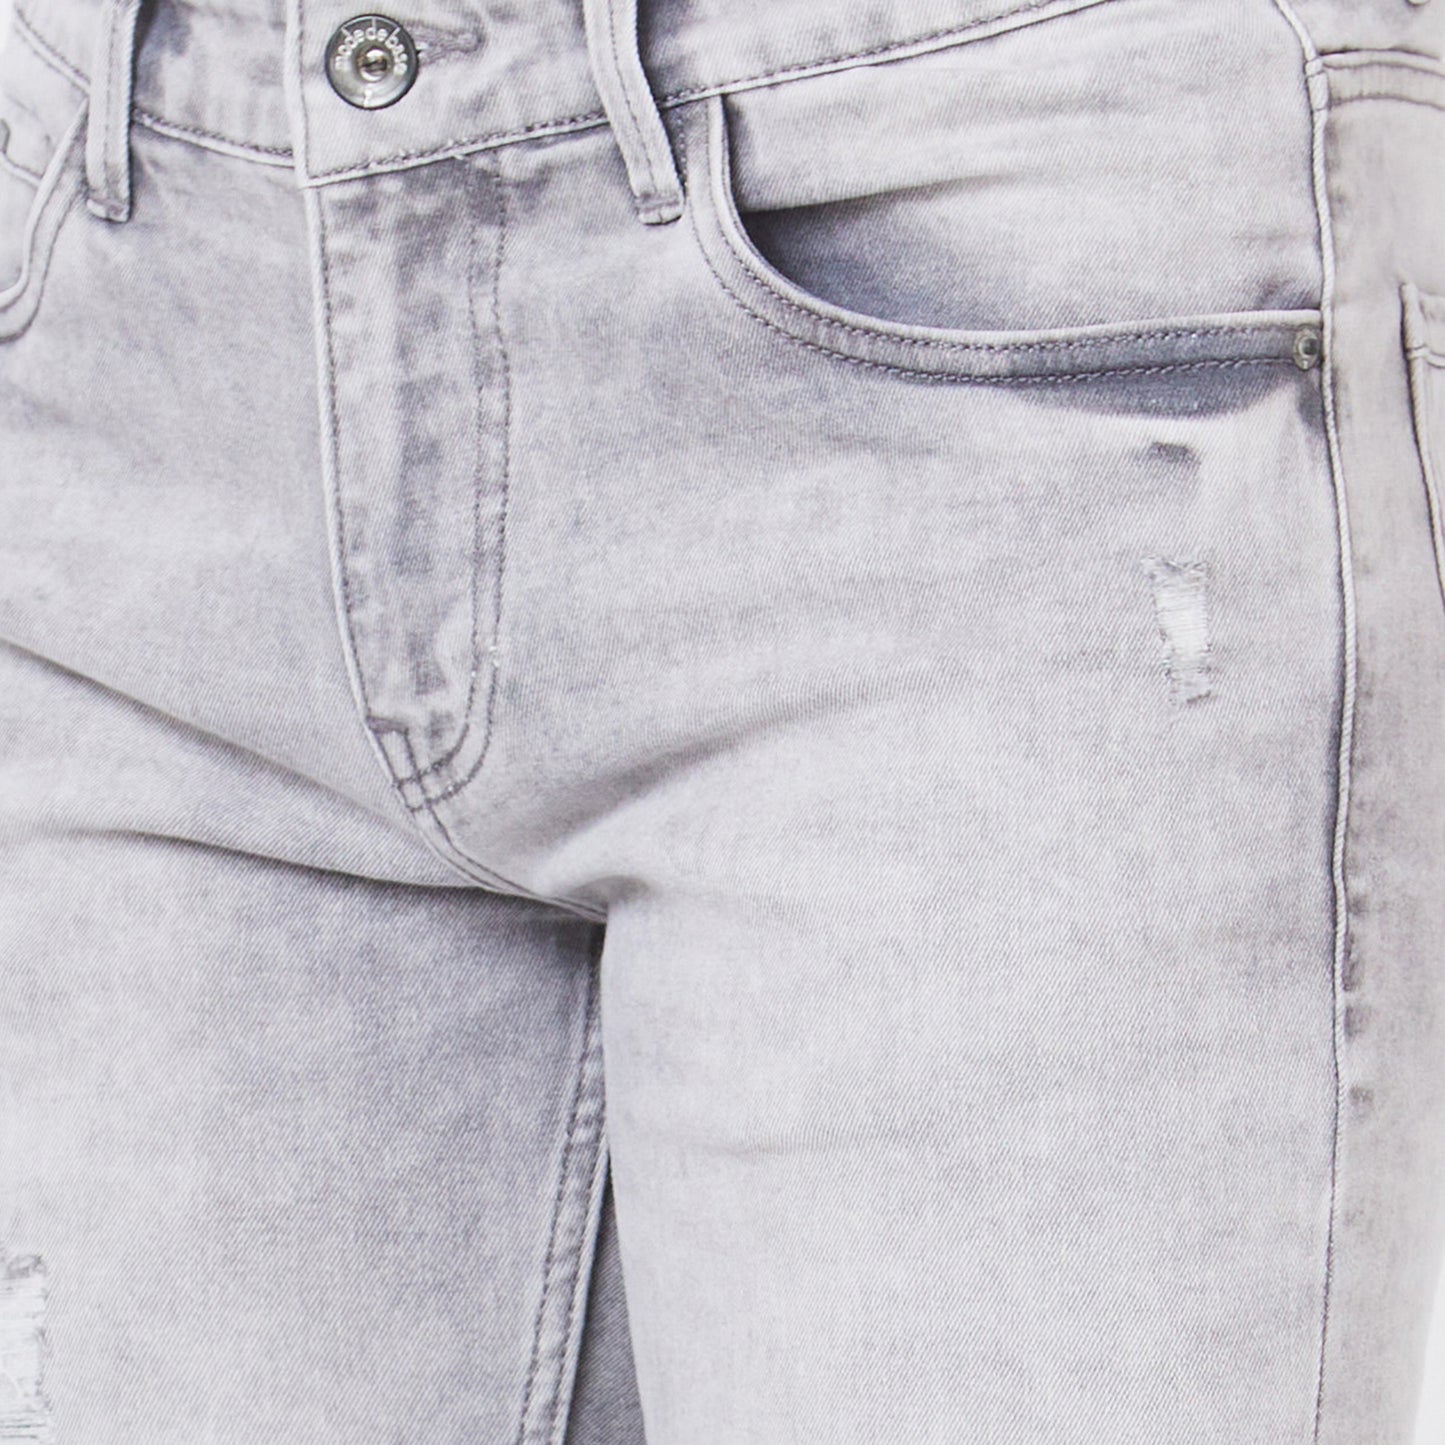 Men's Slim Fit Straight Casual Denim Boot-cut Jeans